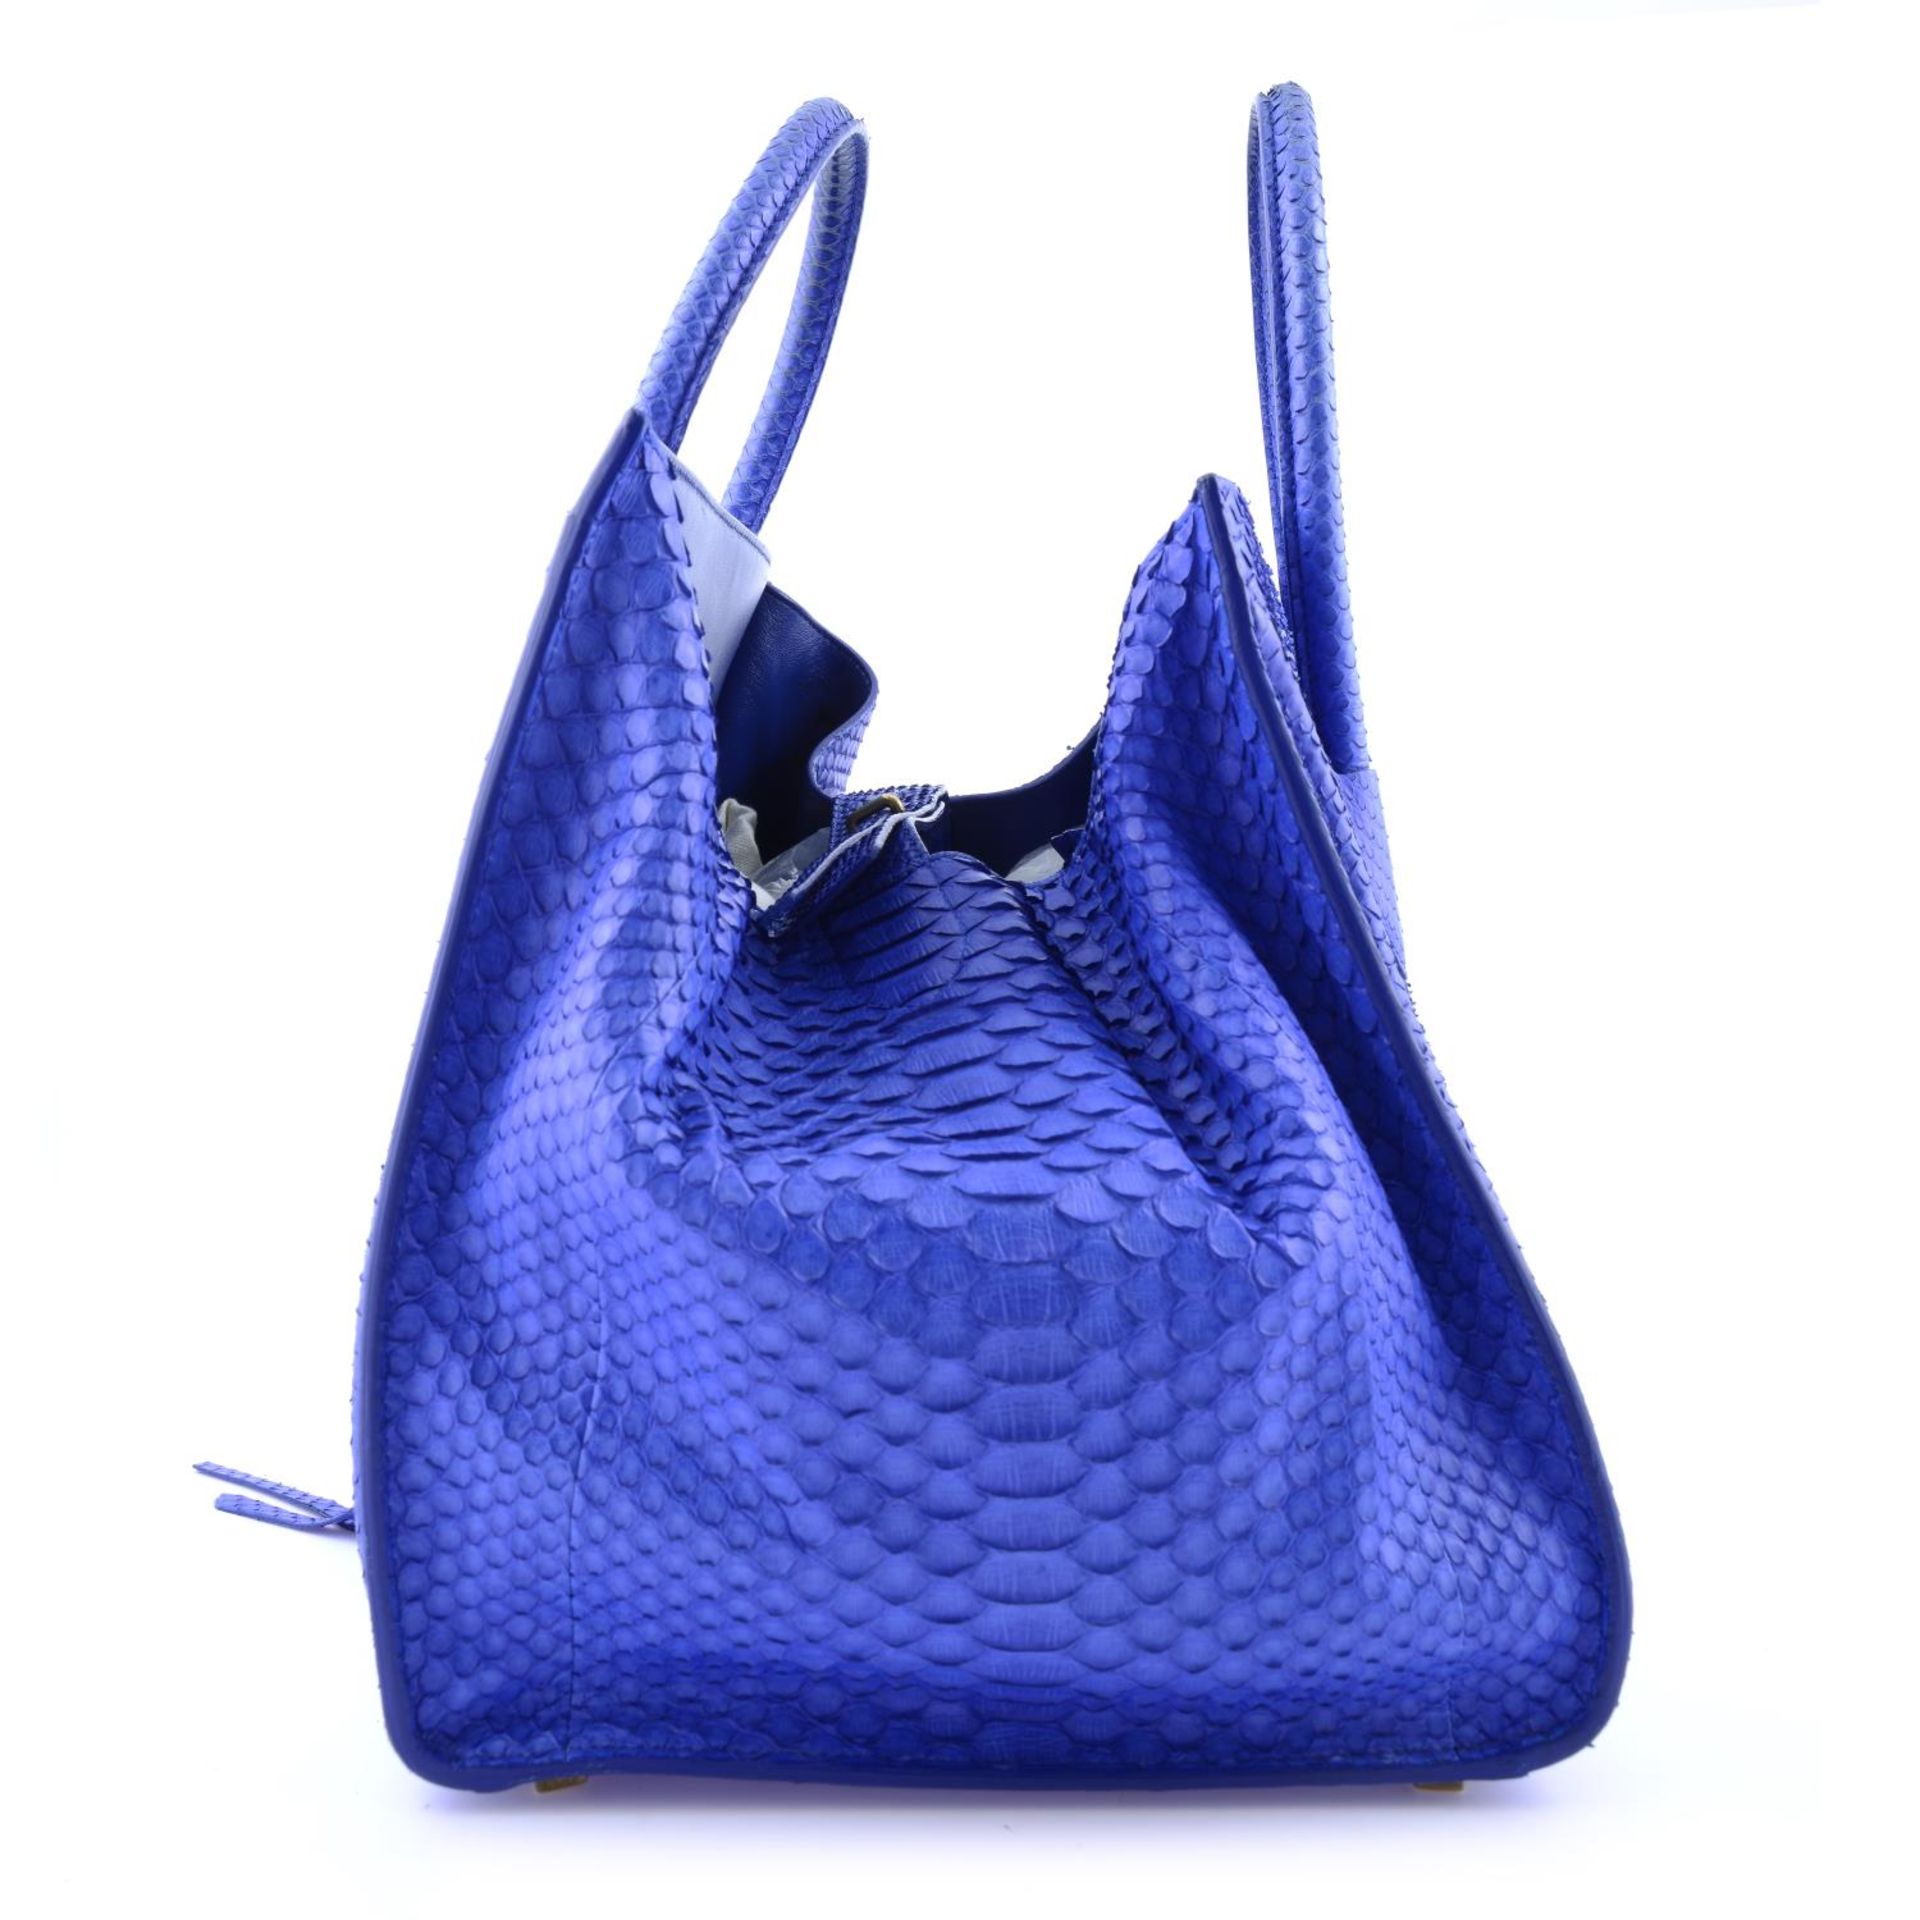 CÉLINE - a blue python skin Phantom handbag. - Bild 3 aus 9